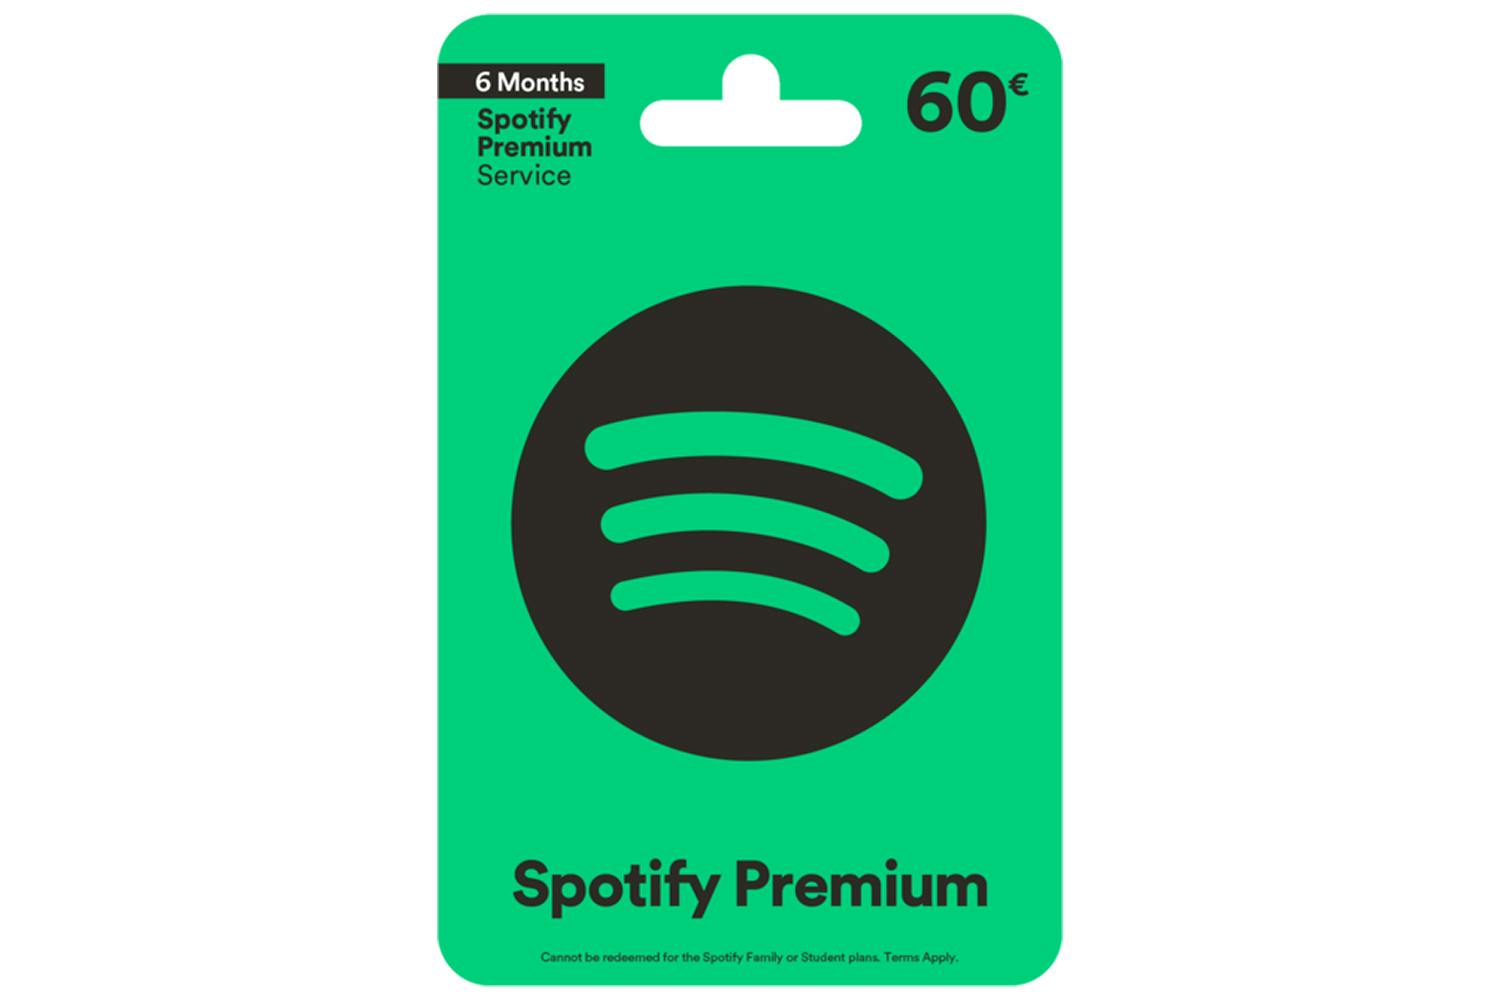 Spotify $60 Gift Card SPOTIFY $60 - Best Buy